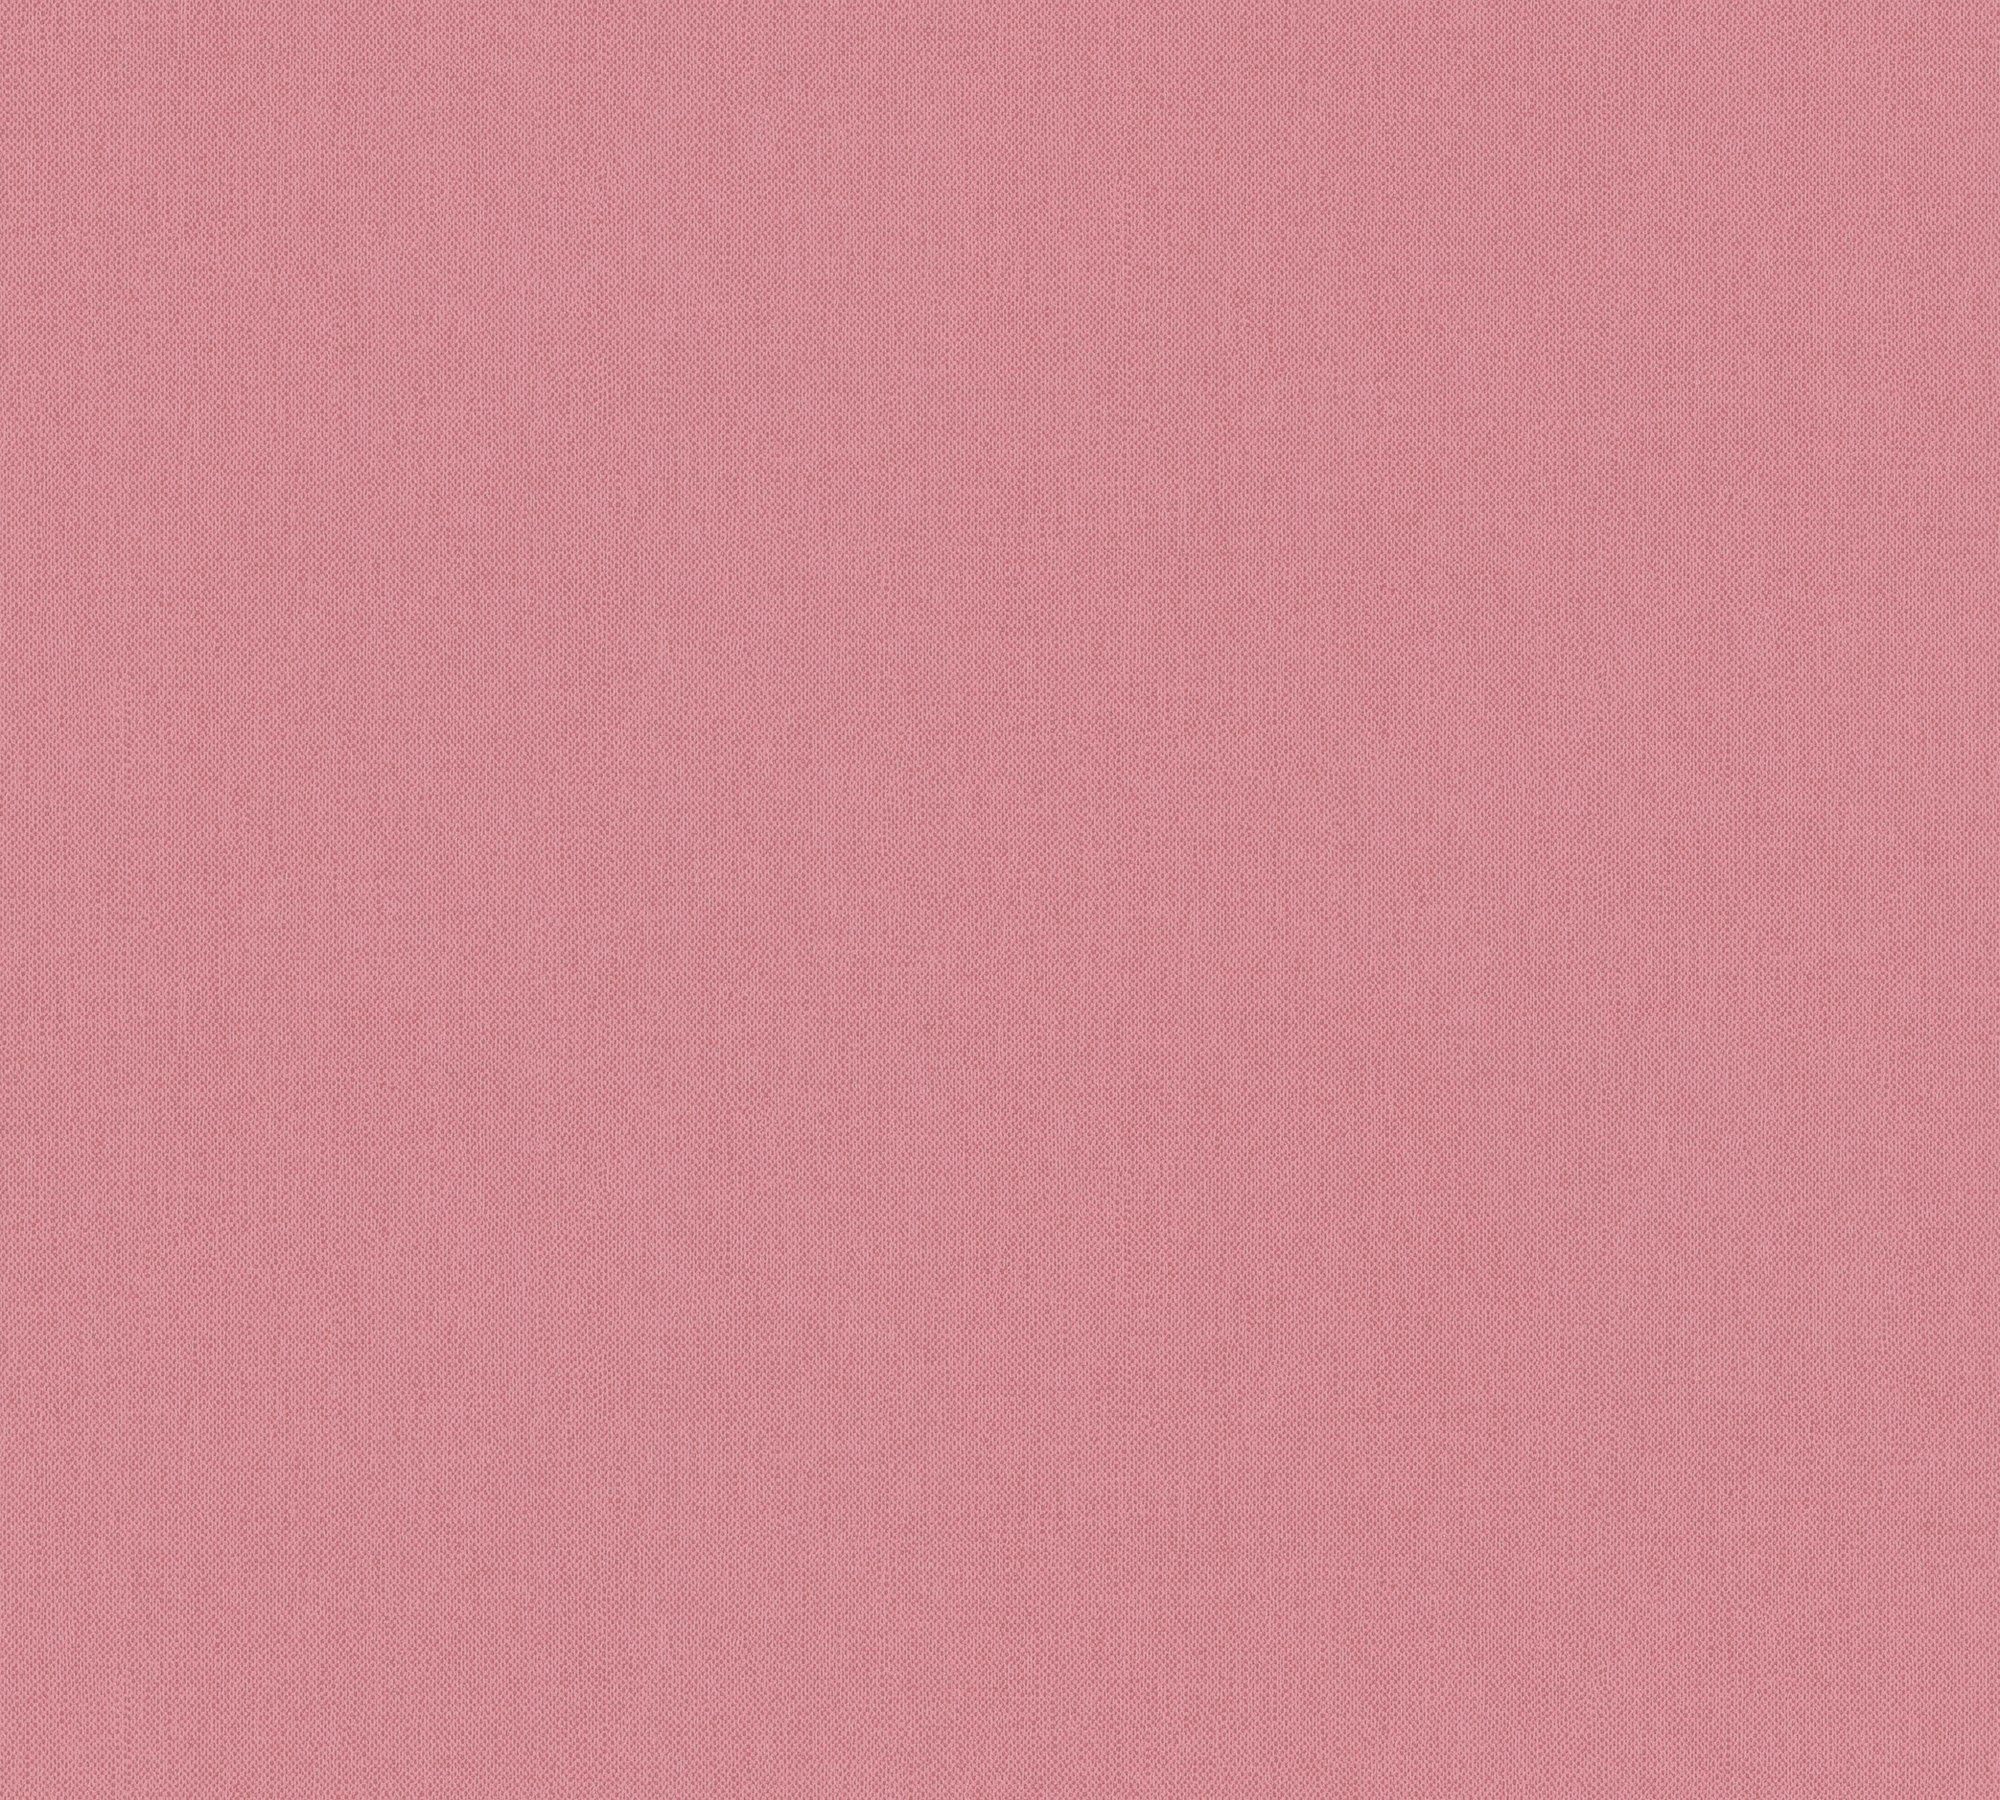 Vliestapete Paper Floral einfarbig, unifarben, Architects Tapete glatt, rosa Impression, Uni